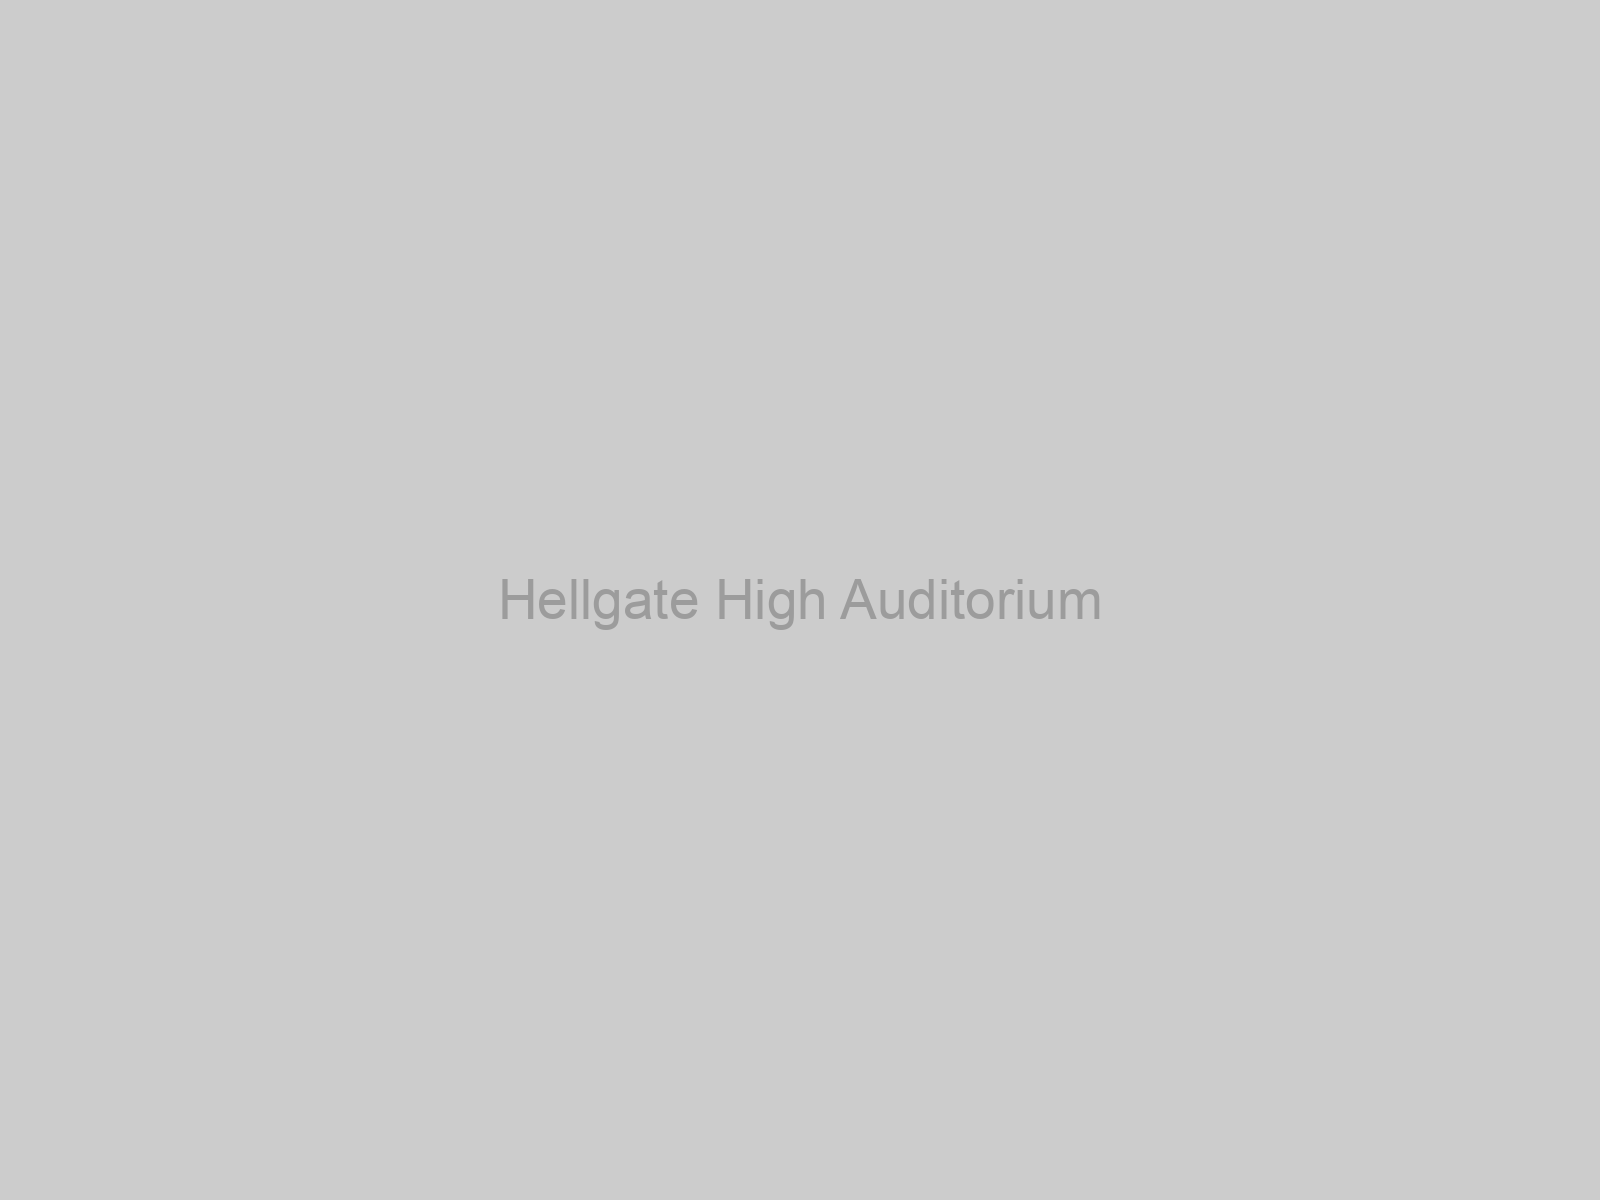 Hellgate High Auditorium